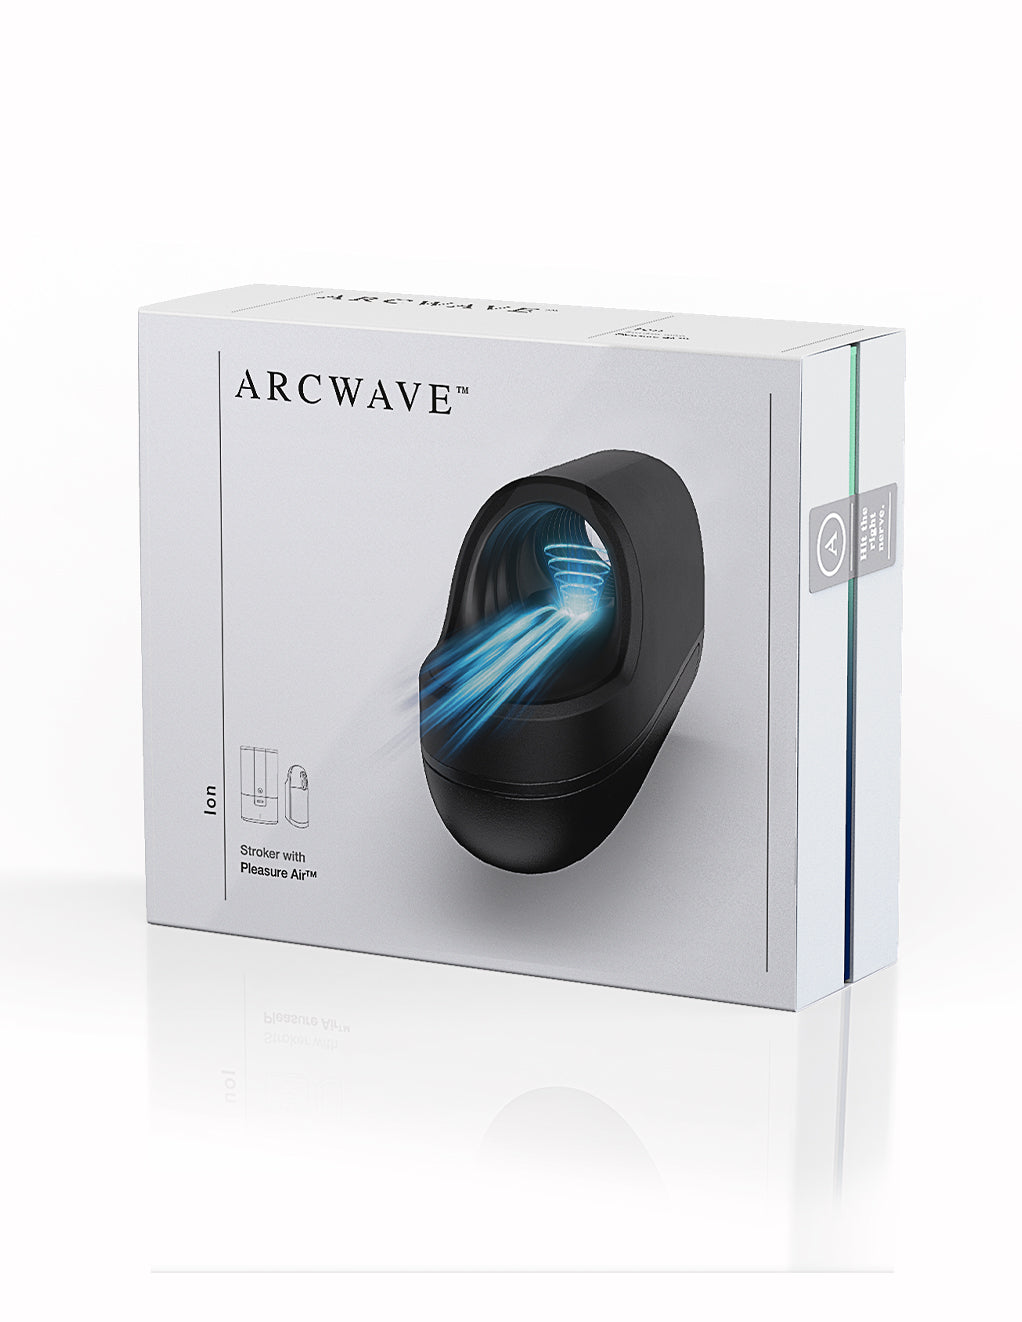 Arcwave Ion- Package